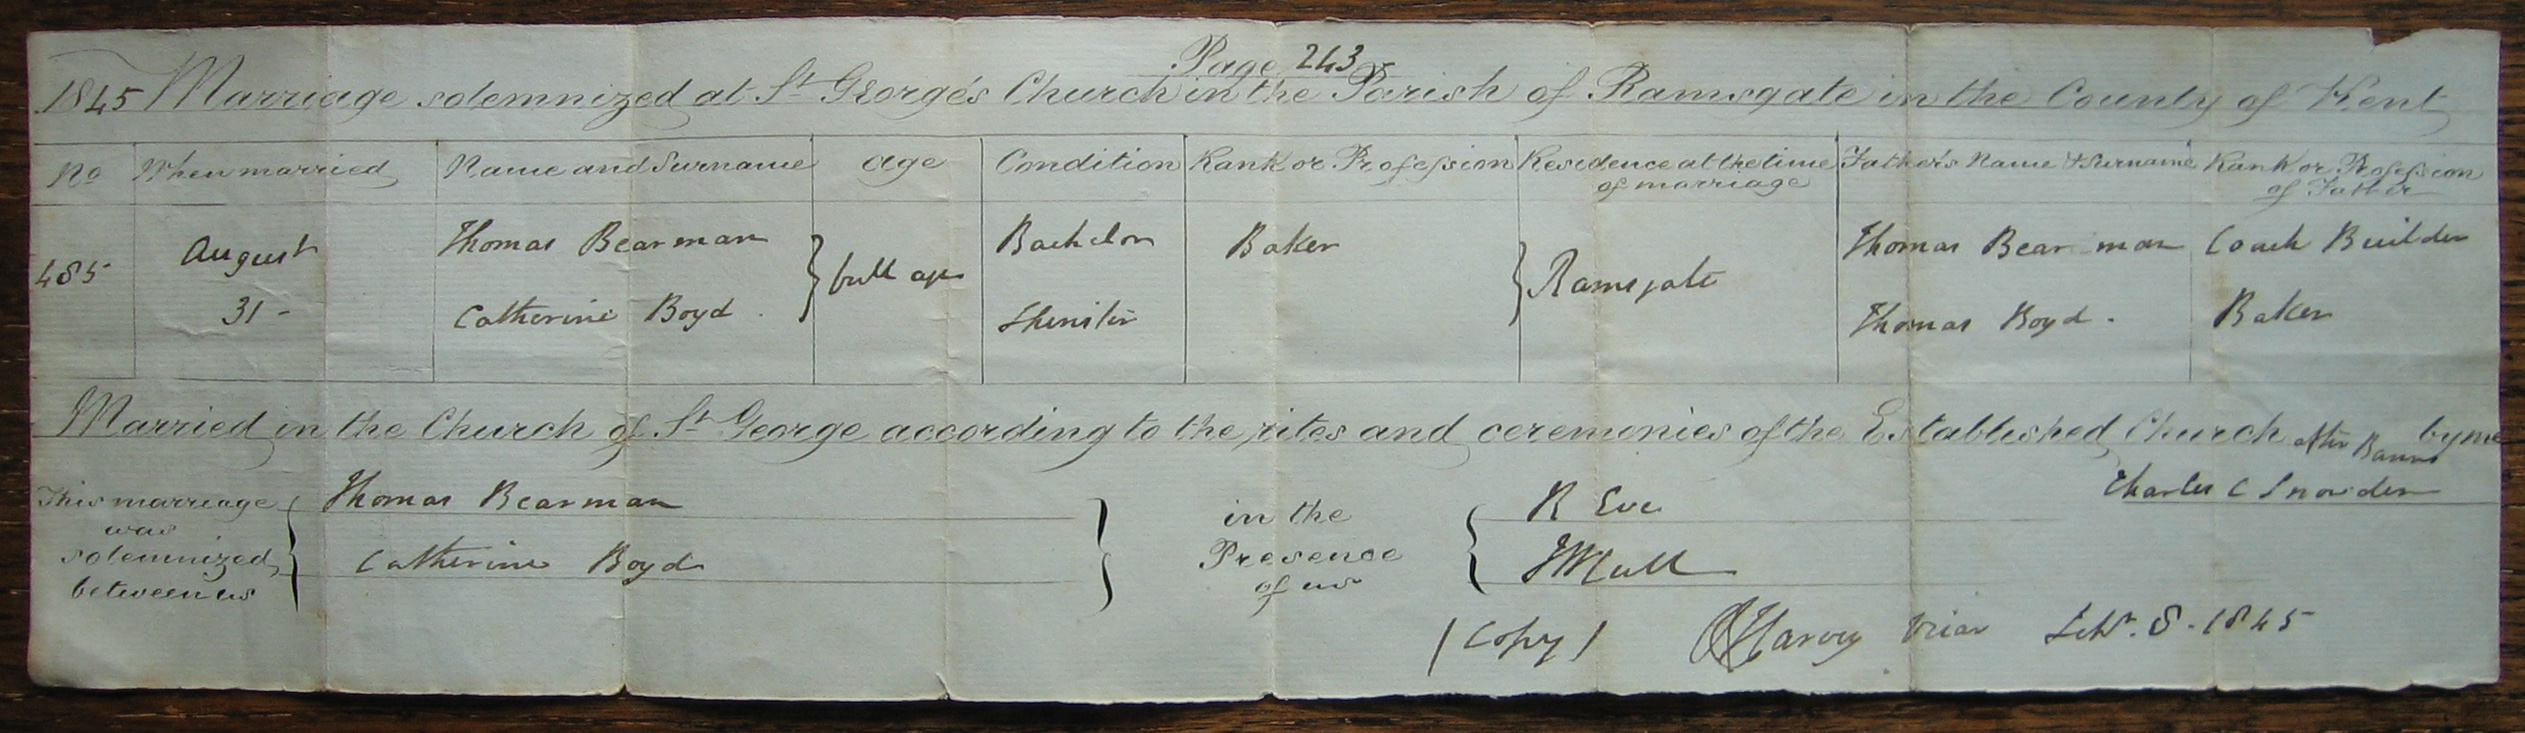 1845 marriage of Catherine Boyd to Thomas Bearman